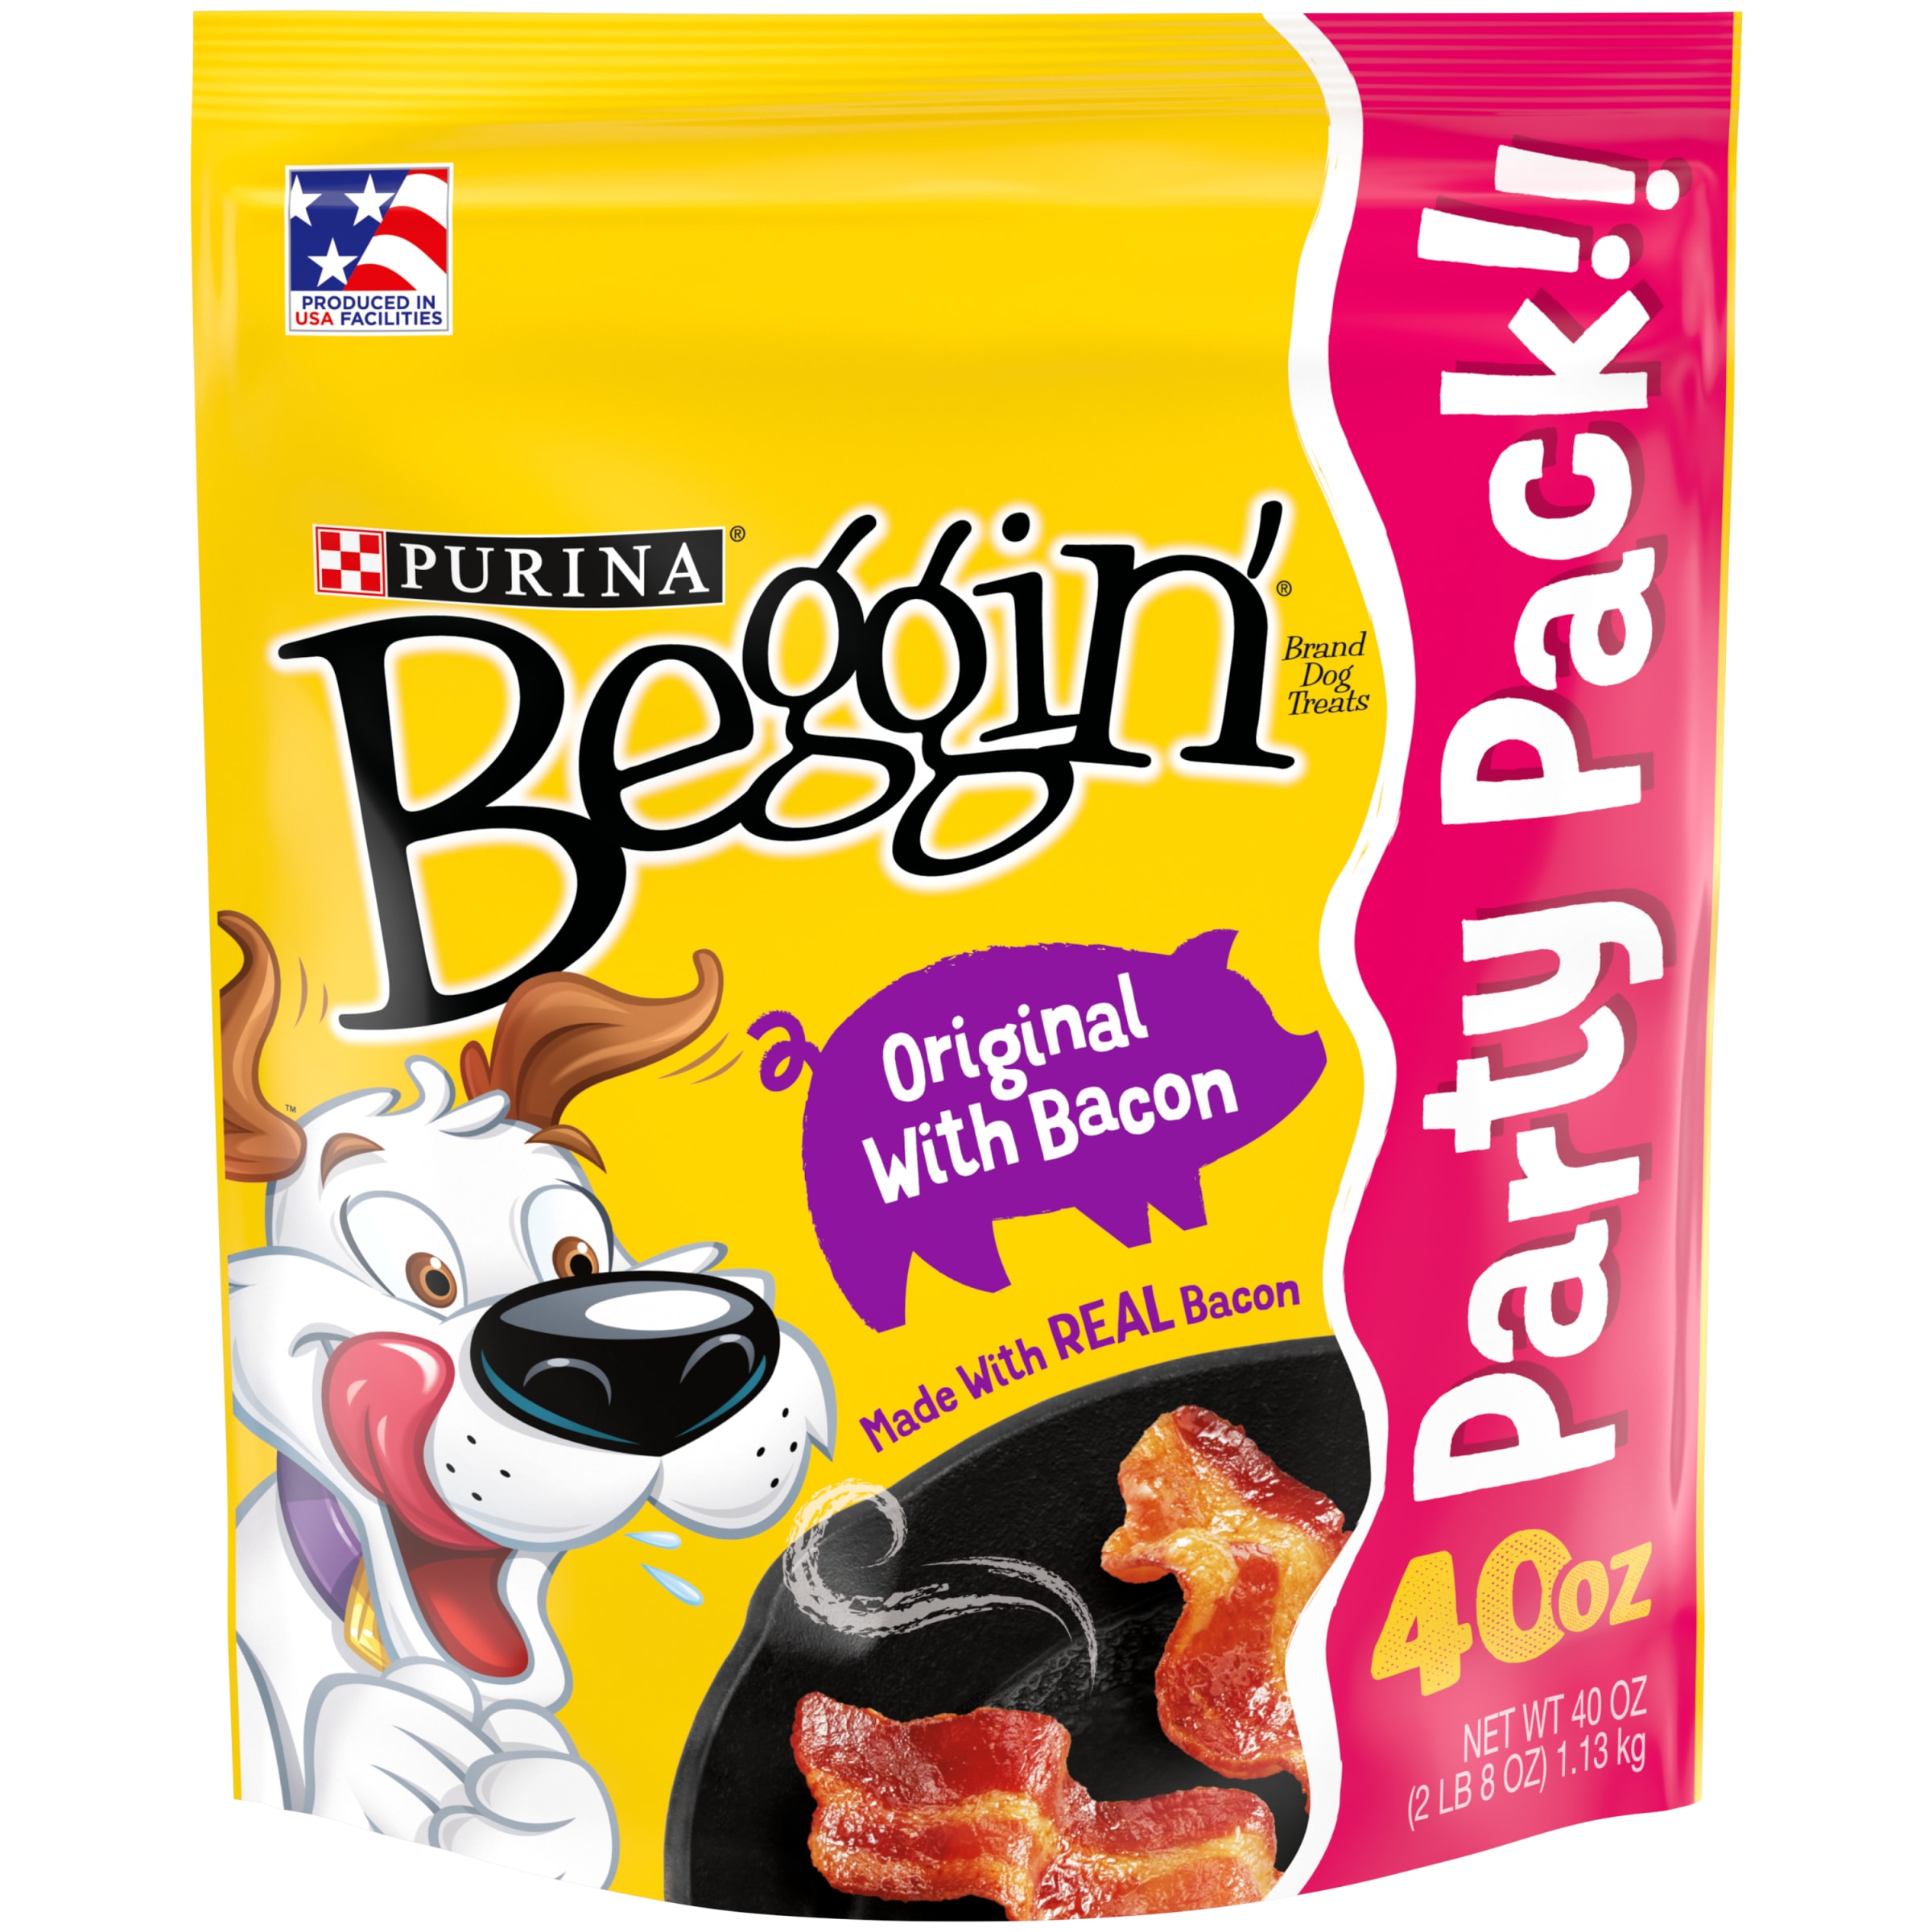 Purina Beggin' Strips Dog Treats Original with Bacon Flavor Dog Chews Snacks, 40 oz Pouch - image 1 of 10